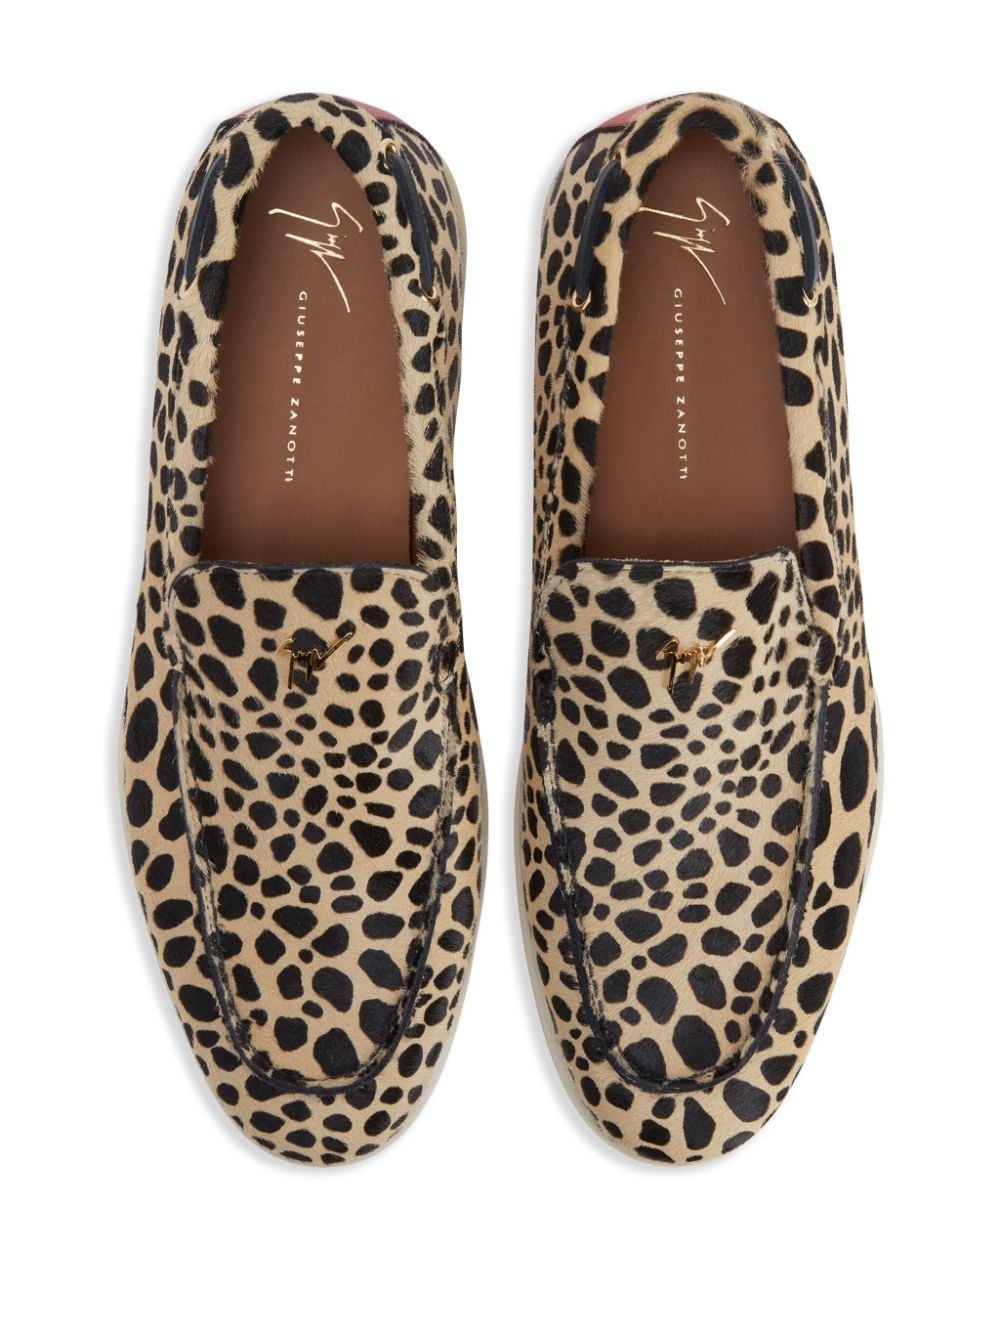 The Maui leopard-print loafers - 4